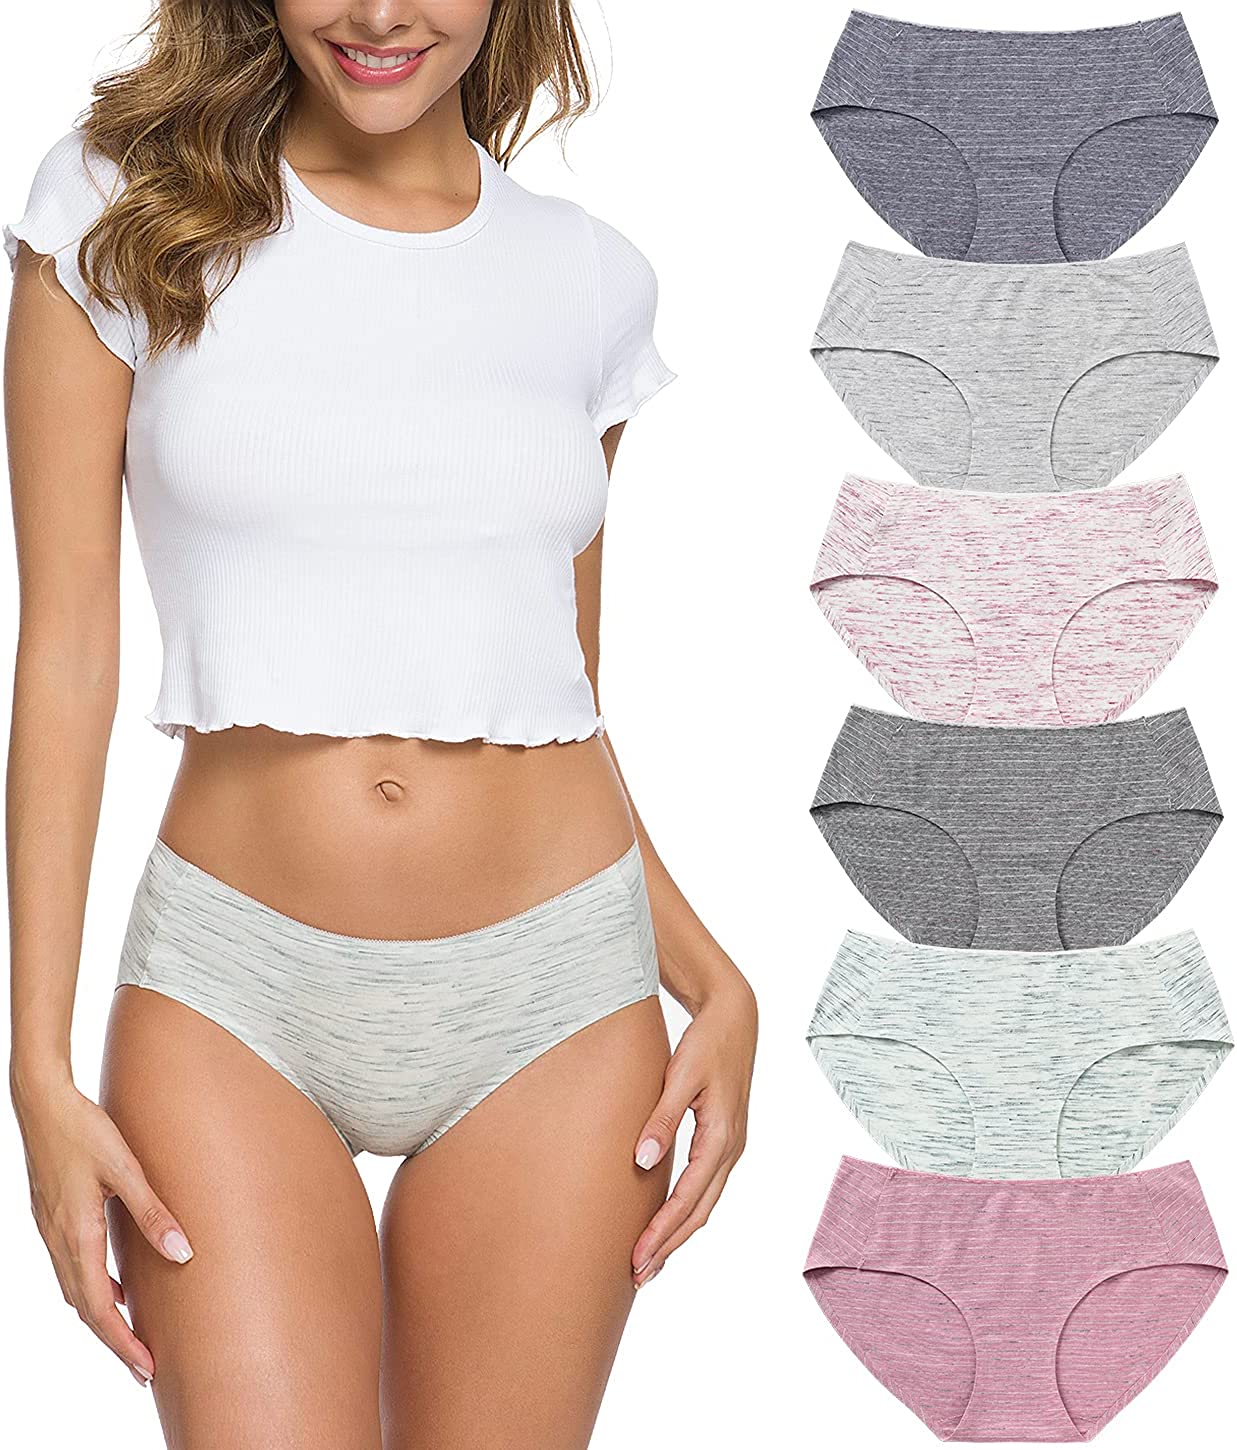  Wealurre Cotton Womens Breathable Panties Seamless Comfort  Underwear